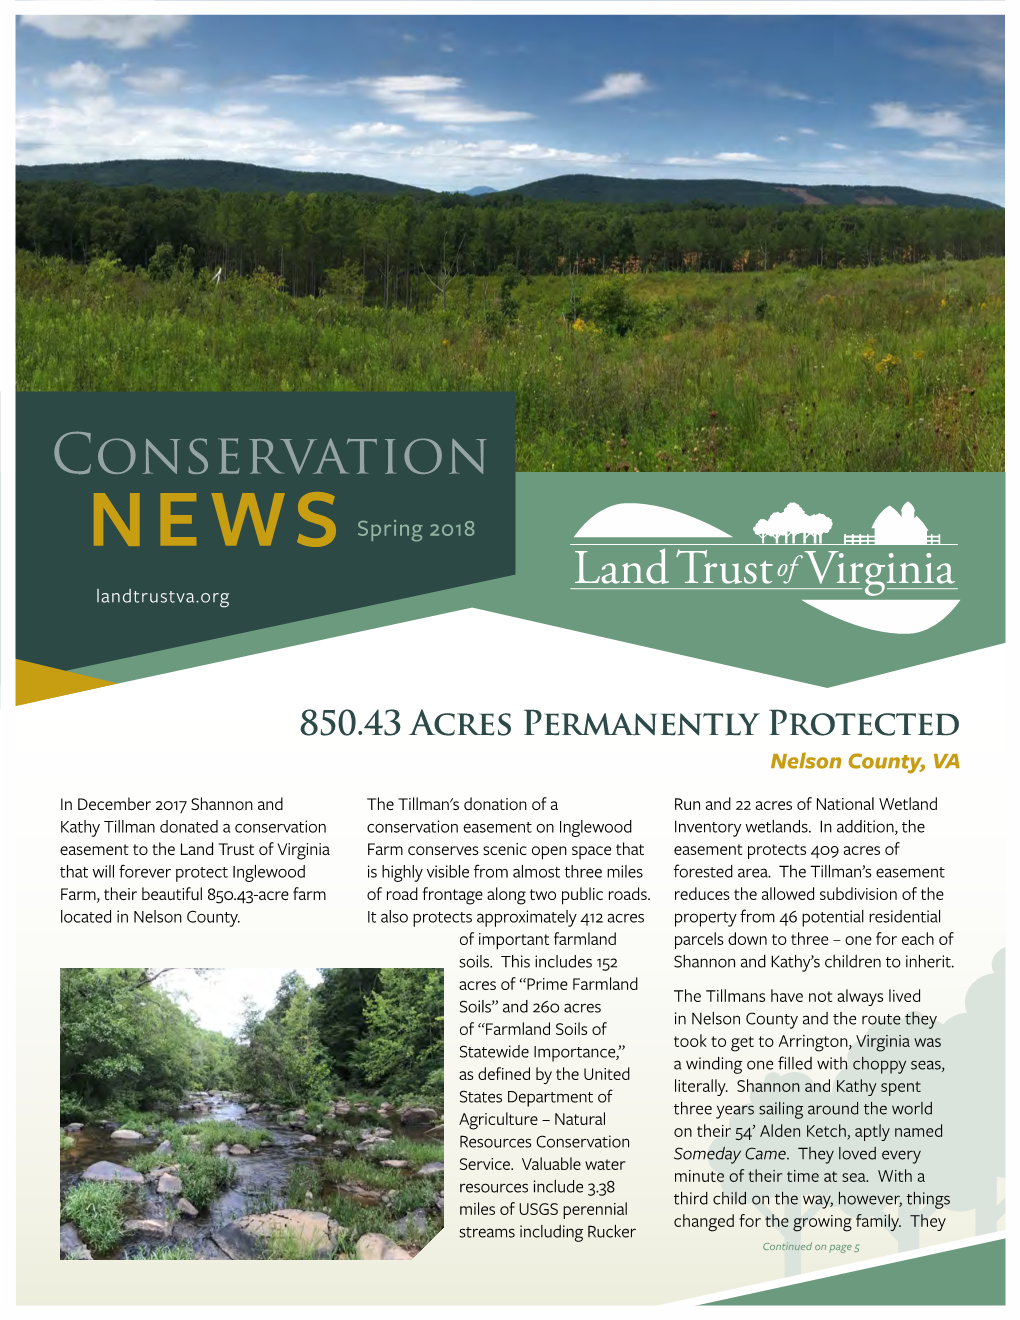 Conservation NEWS Spring 2018 Landtrustva.Org